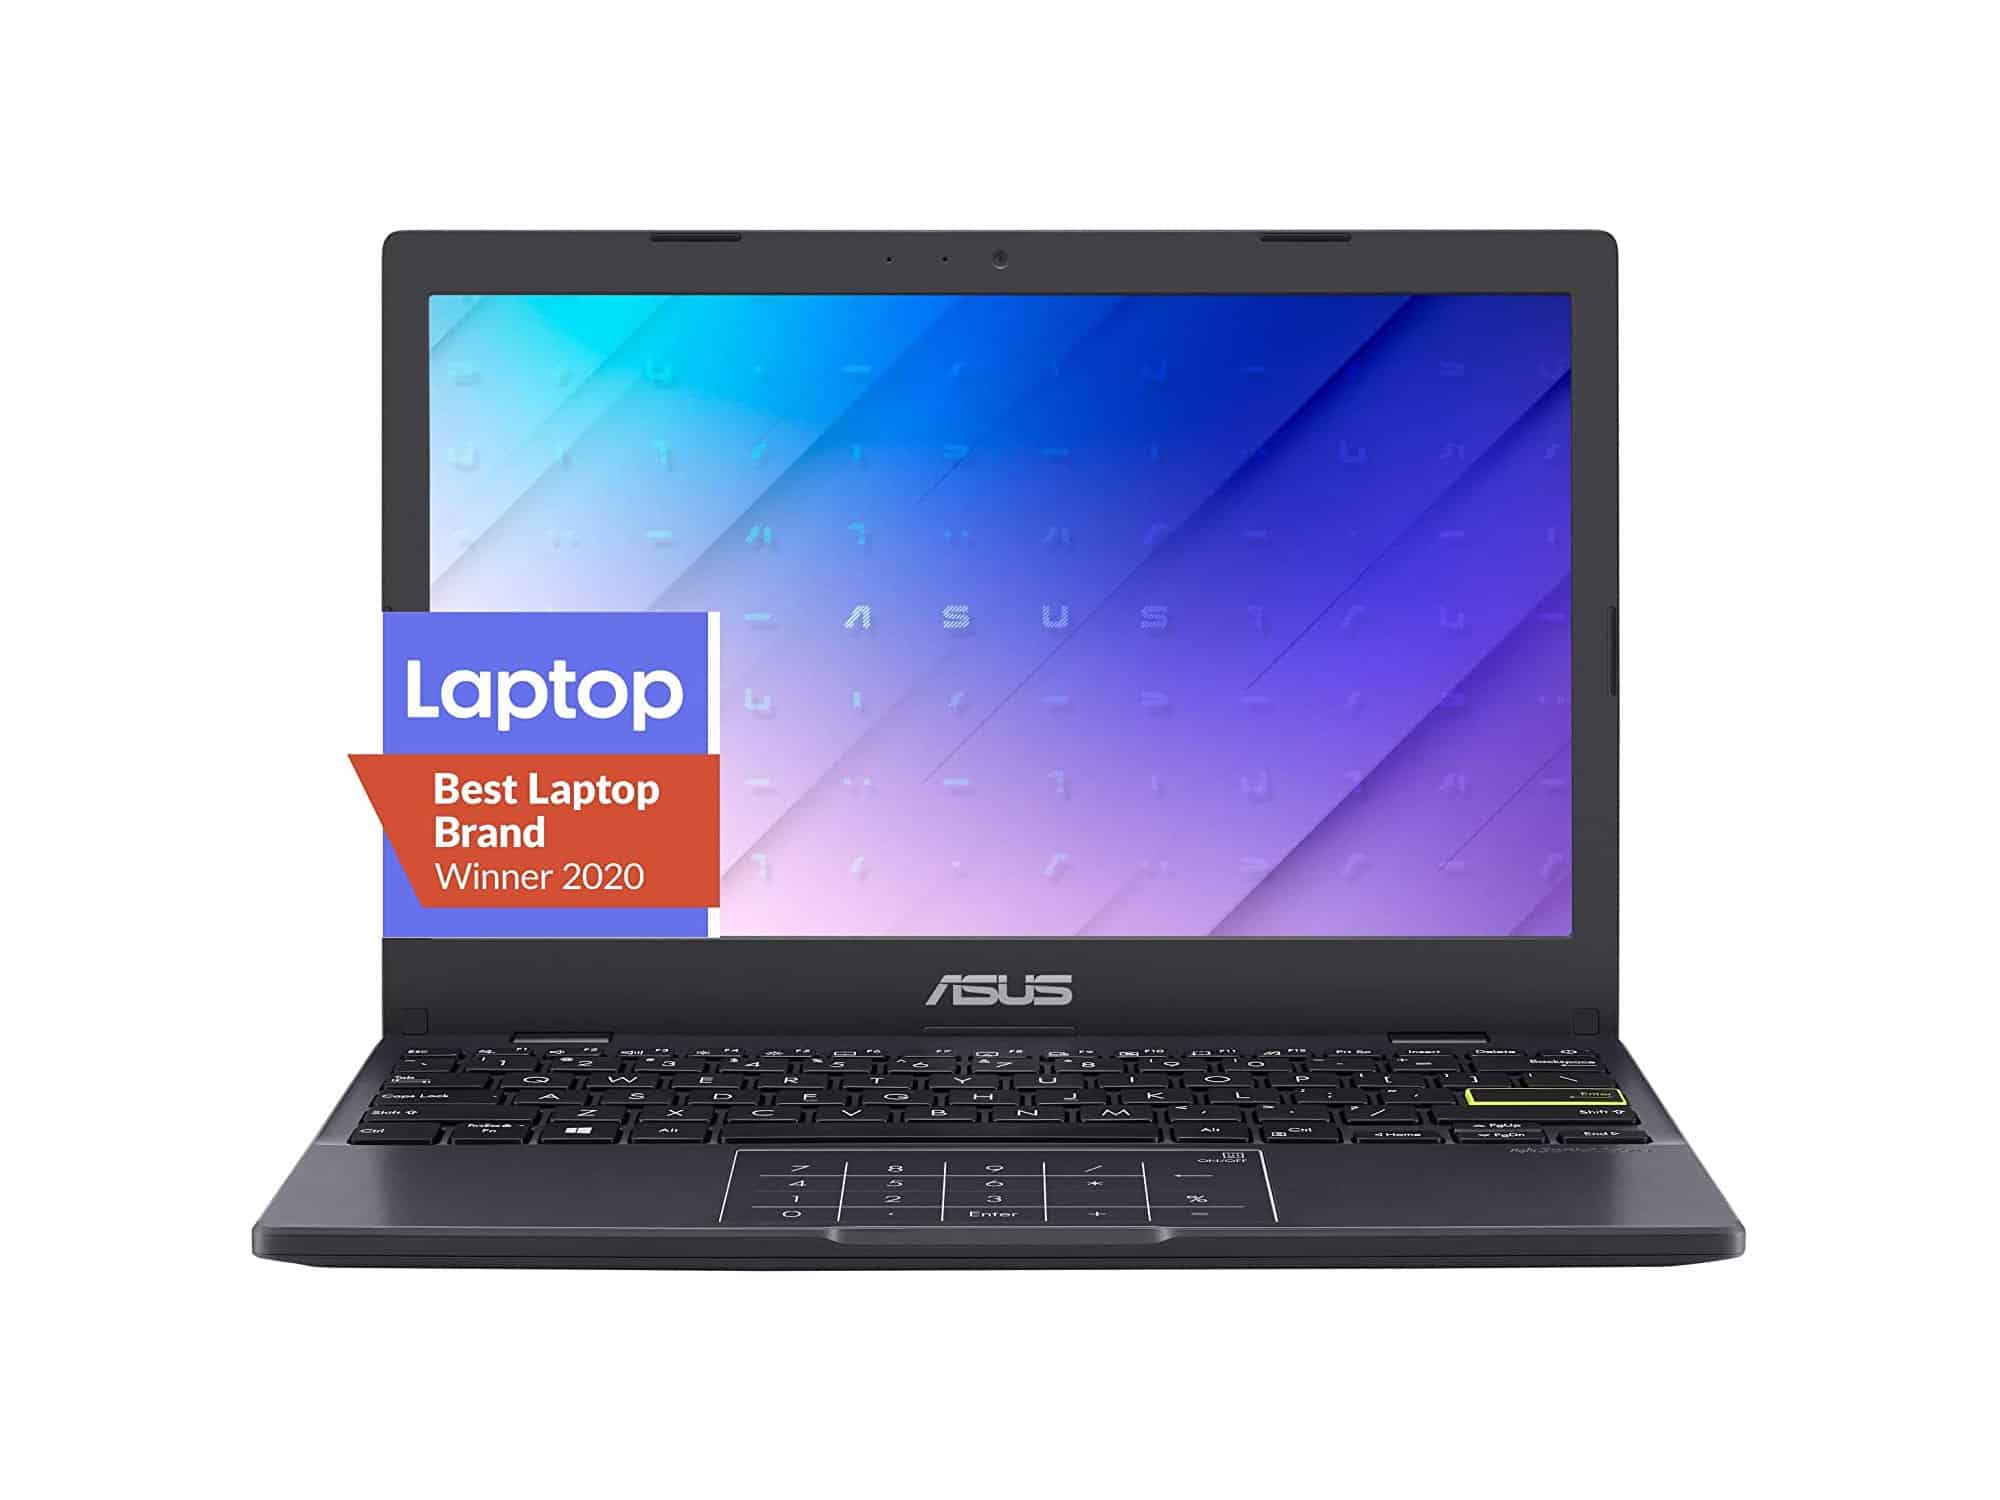 ASUS L210 Ultra Thin Laptop